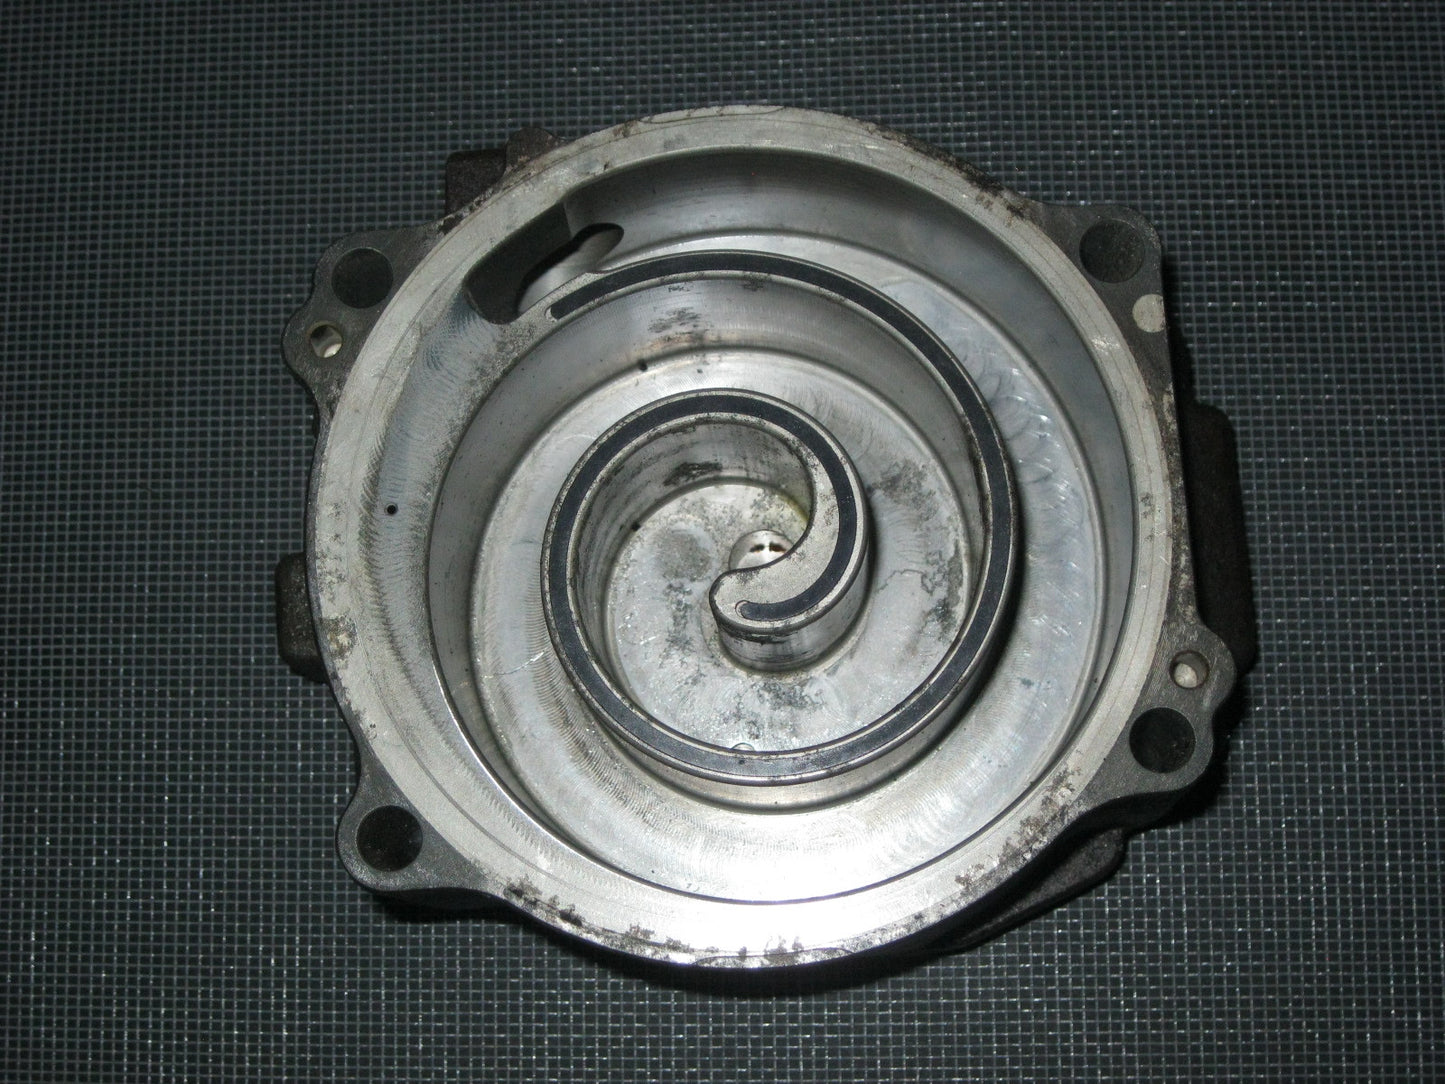 04 05 06 07 08 Mazda RX8 JDM 13B JDM A/C Compressor Rotor Spiral Housing